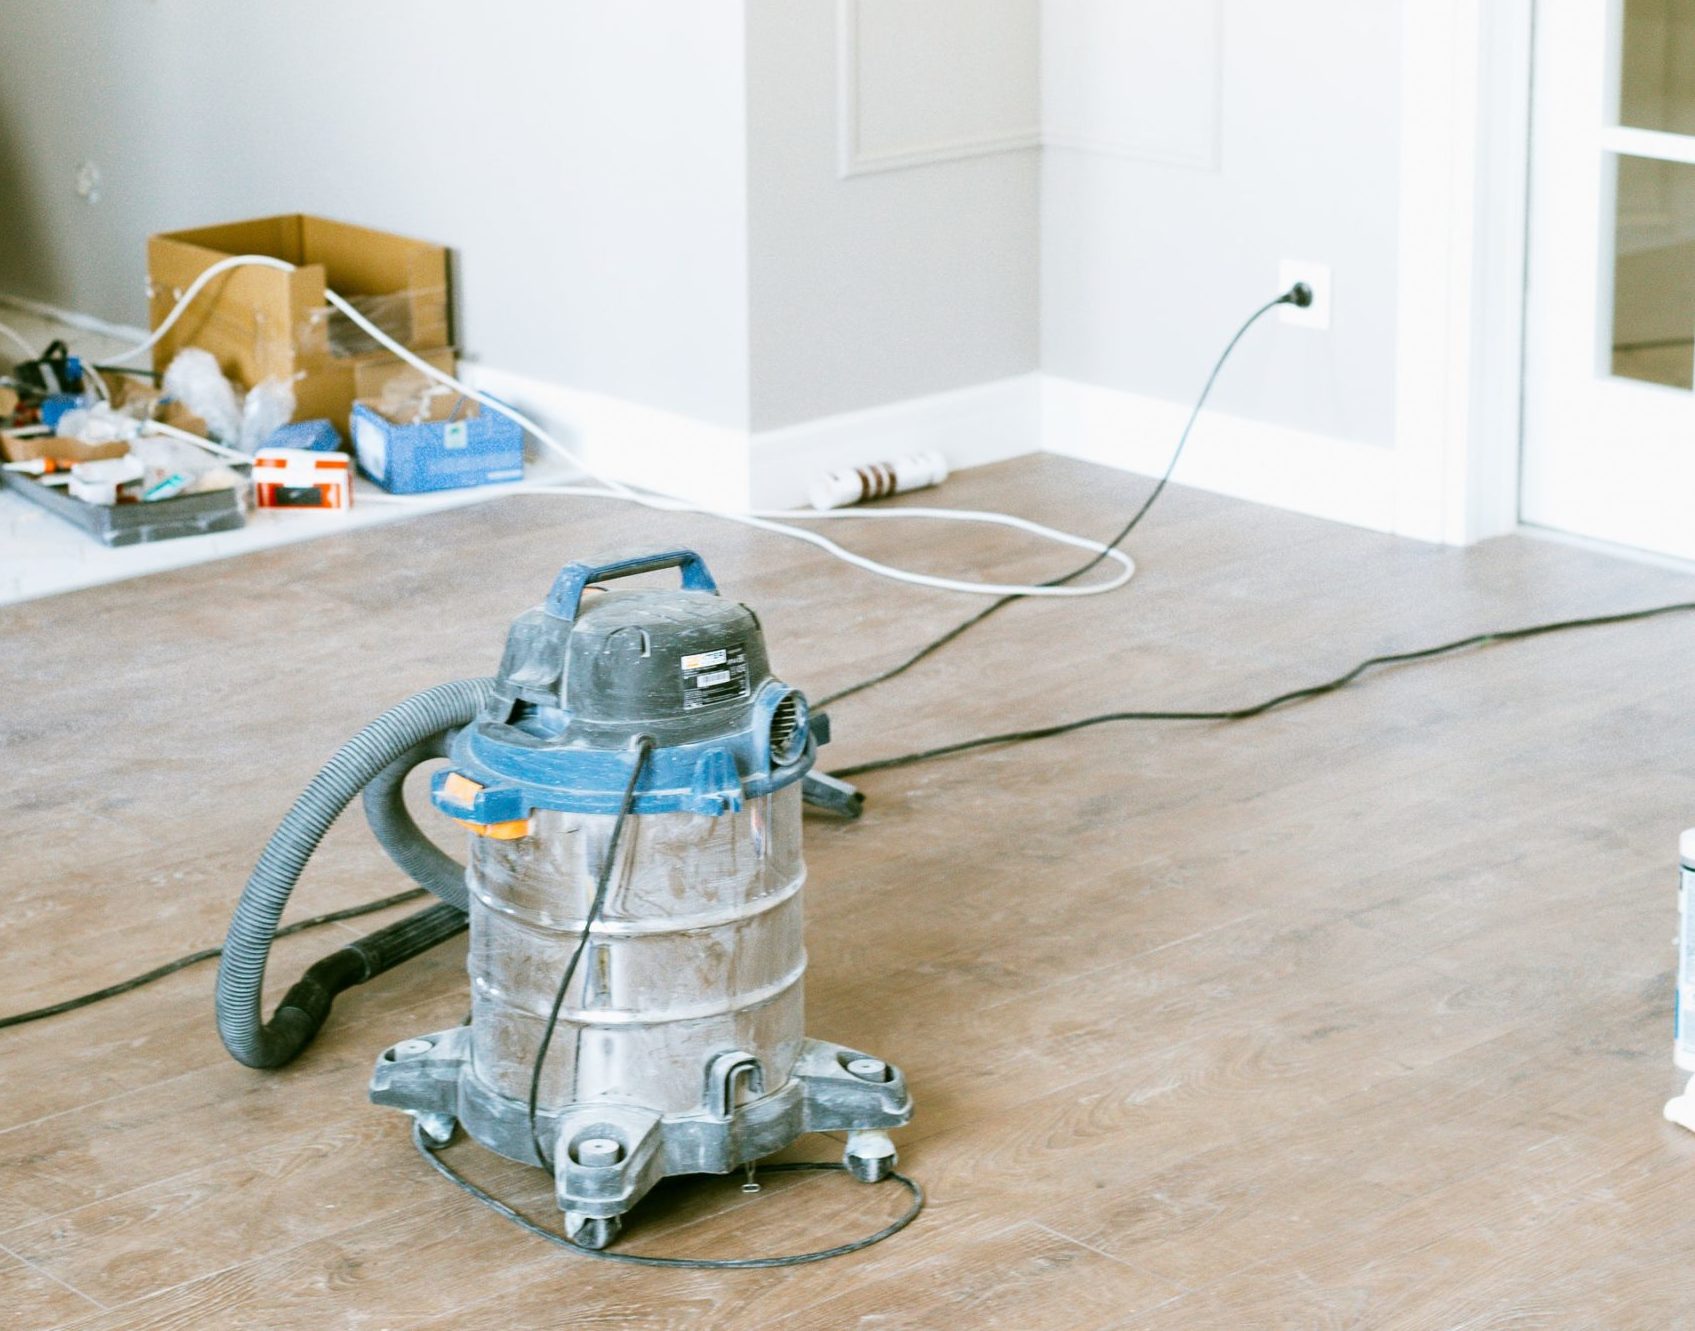 Shopvac vacuum on a dusty wood floor